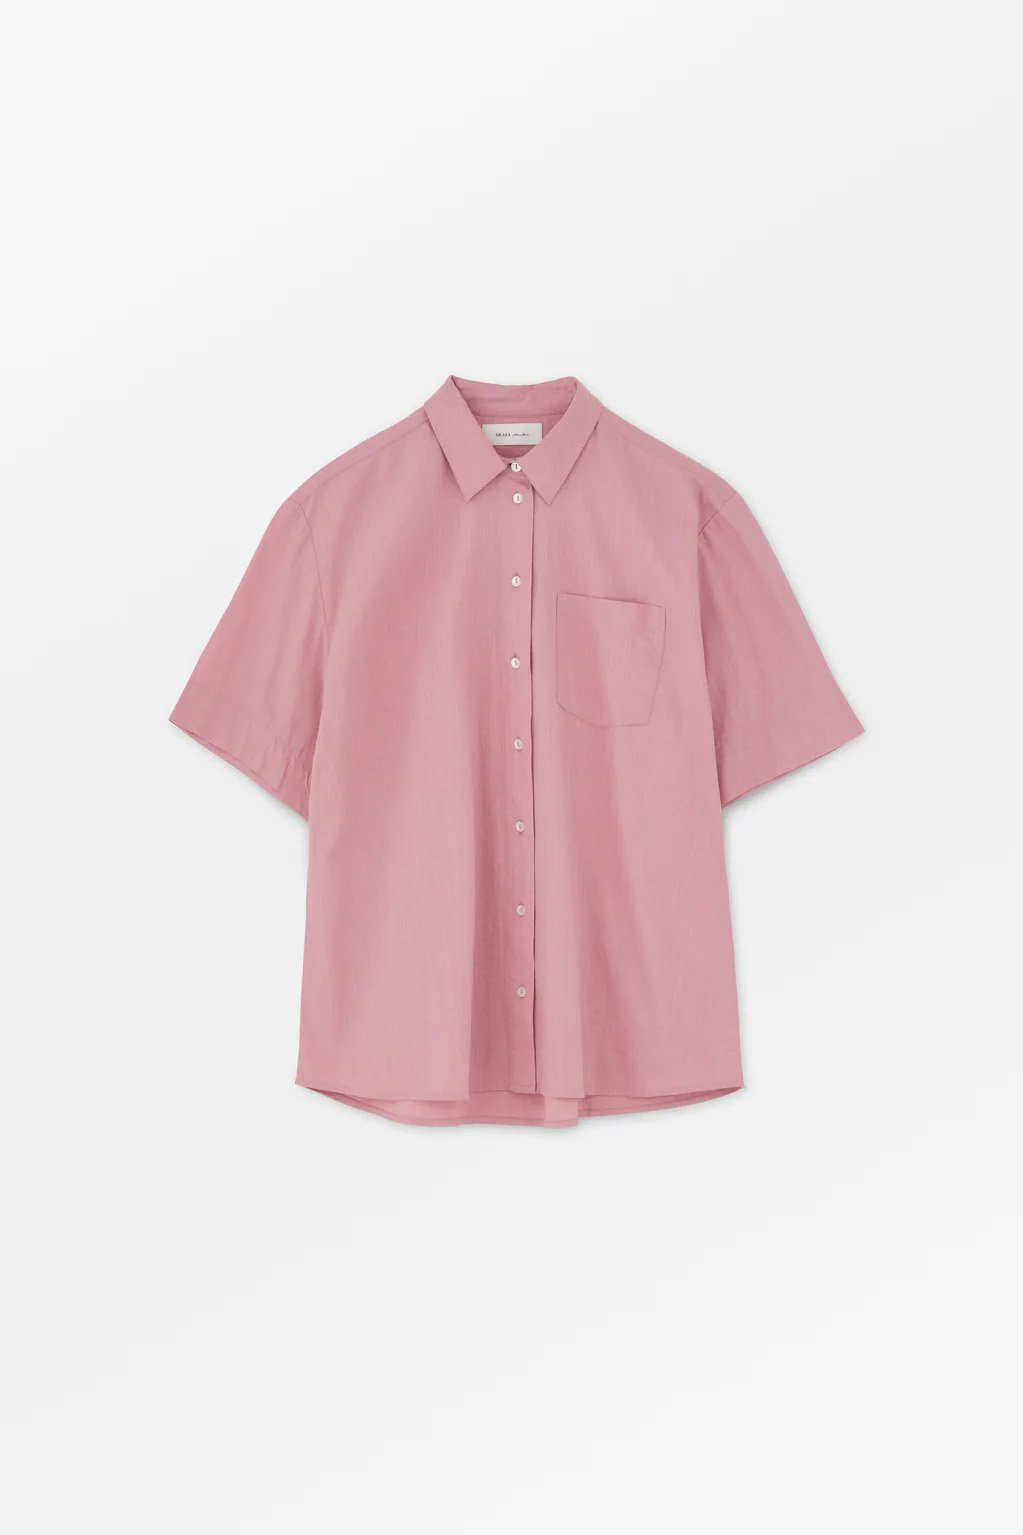 Aggie_shirt-Shirt-10048-24659-Faded_rose copy.jpg